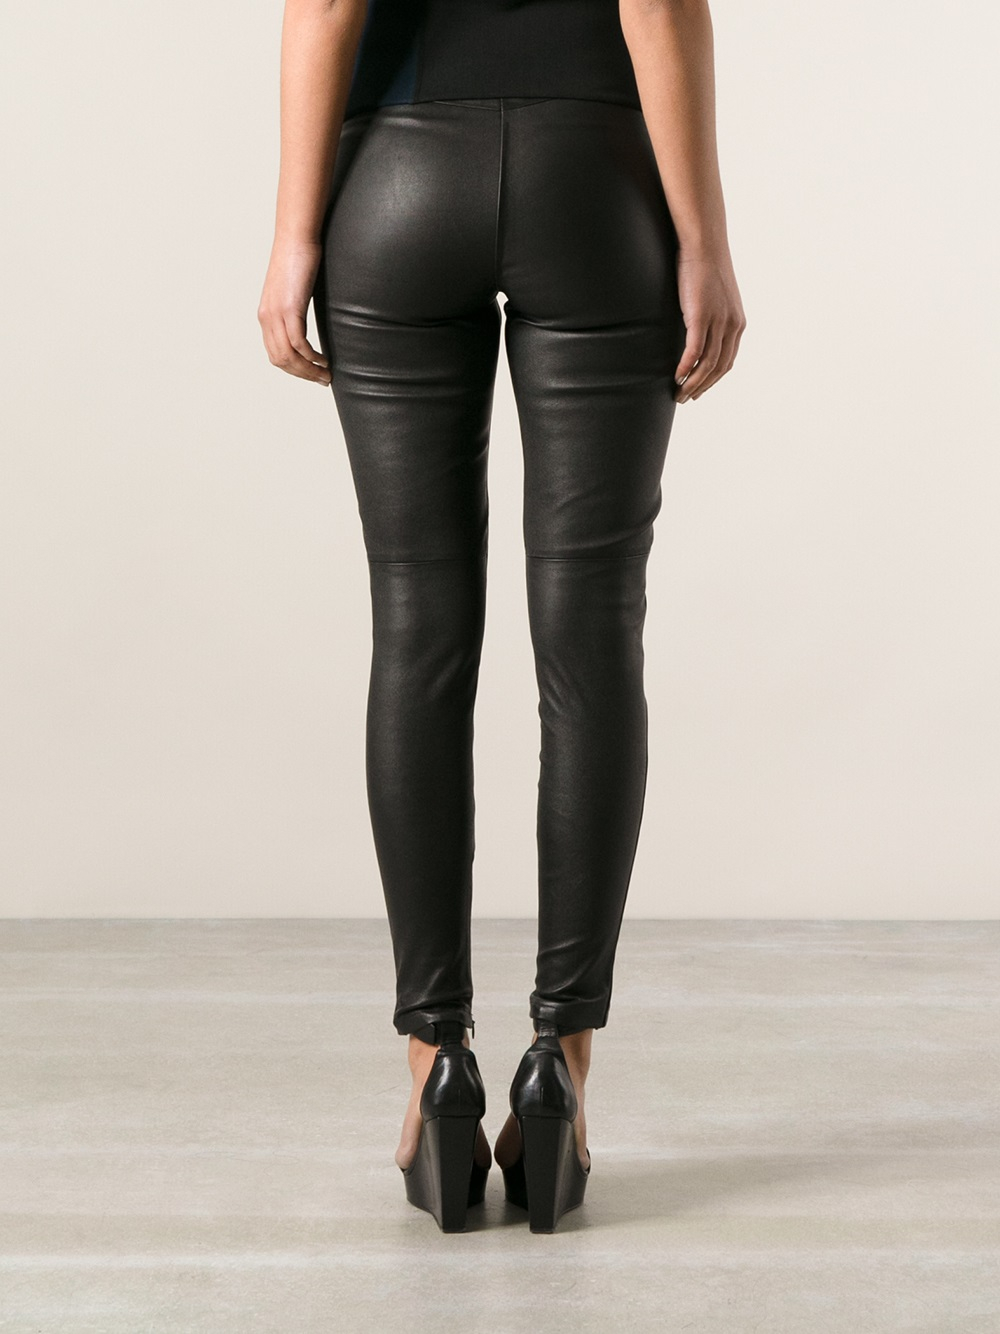 Victoria beckham Leather Leggings in Black | Lyst